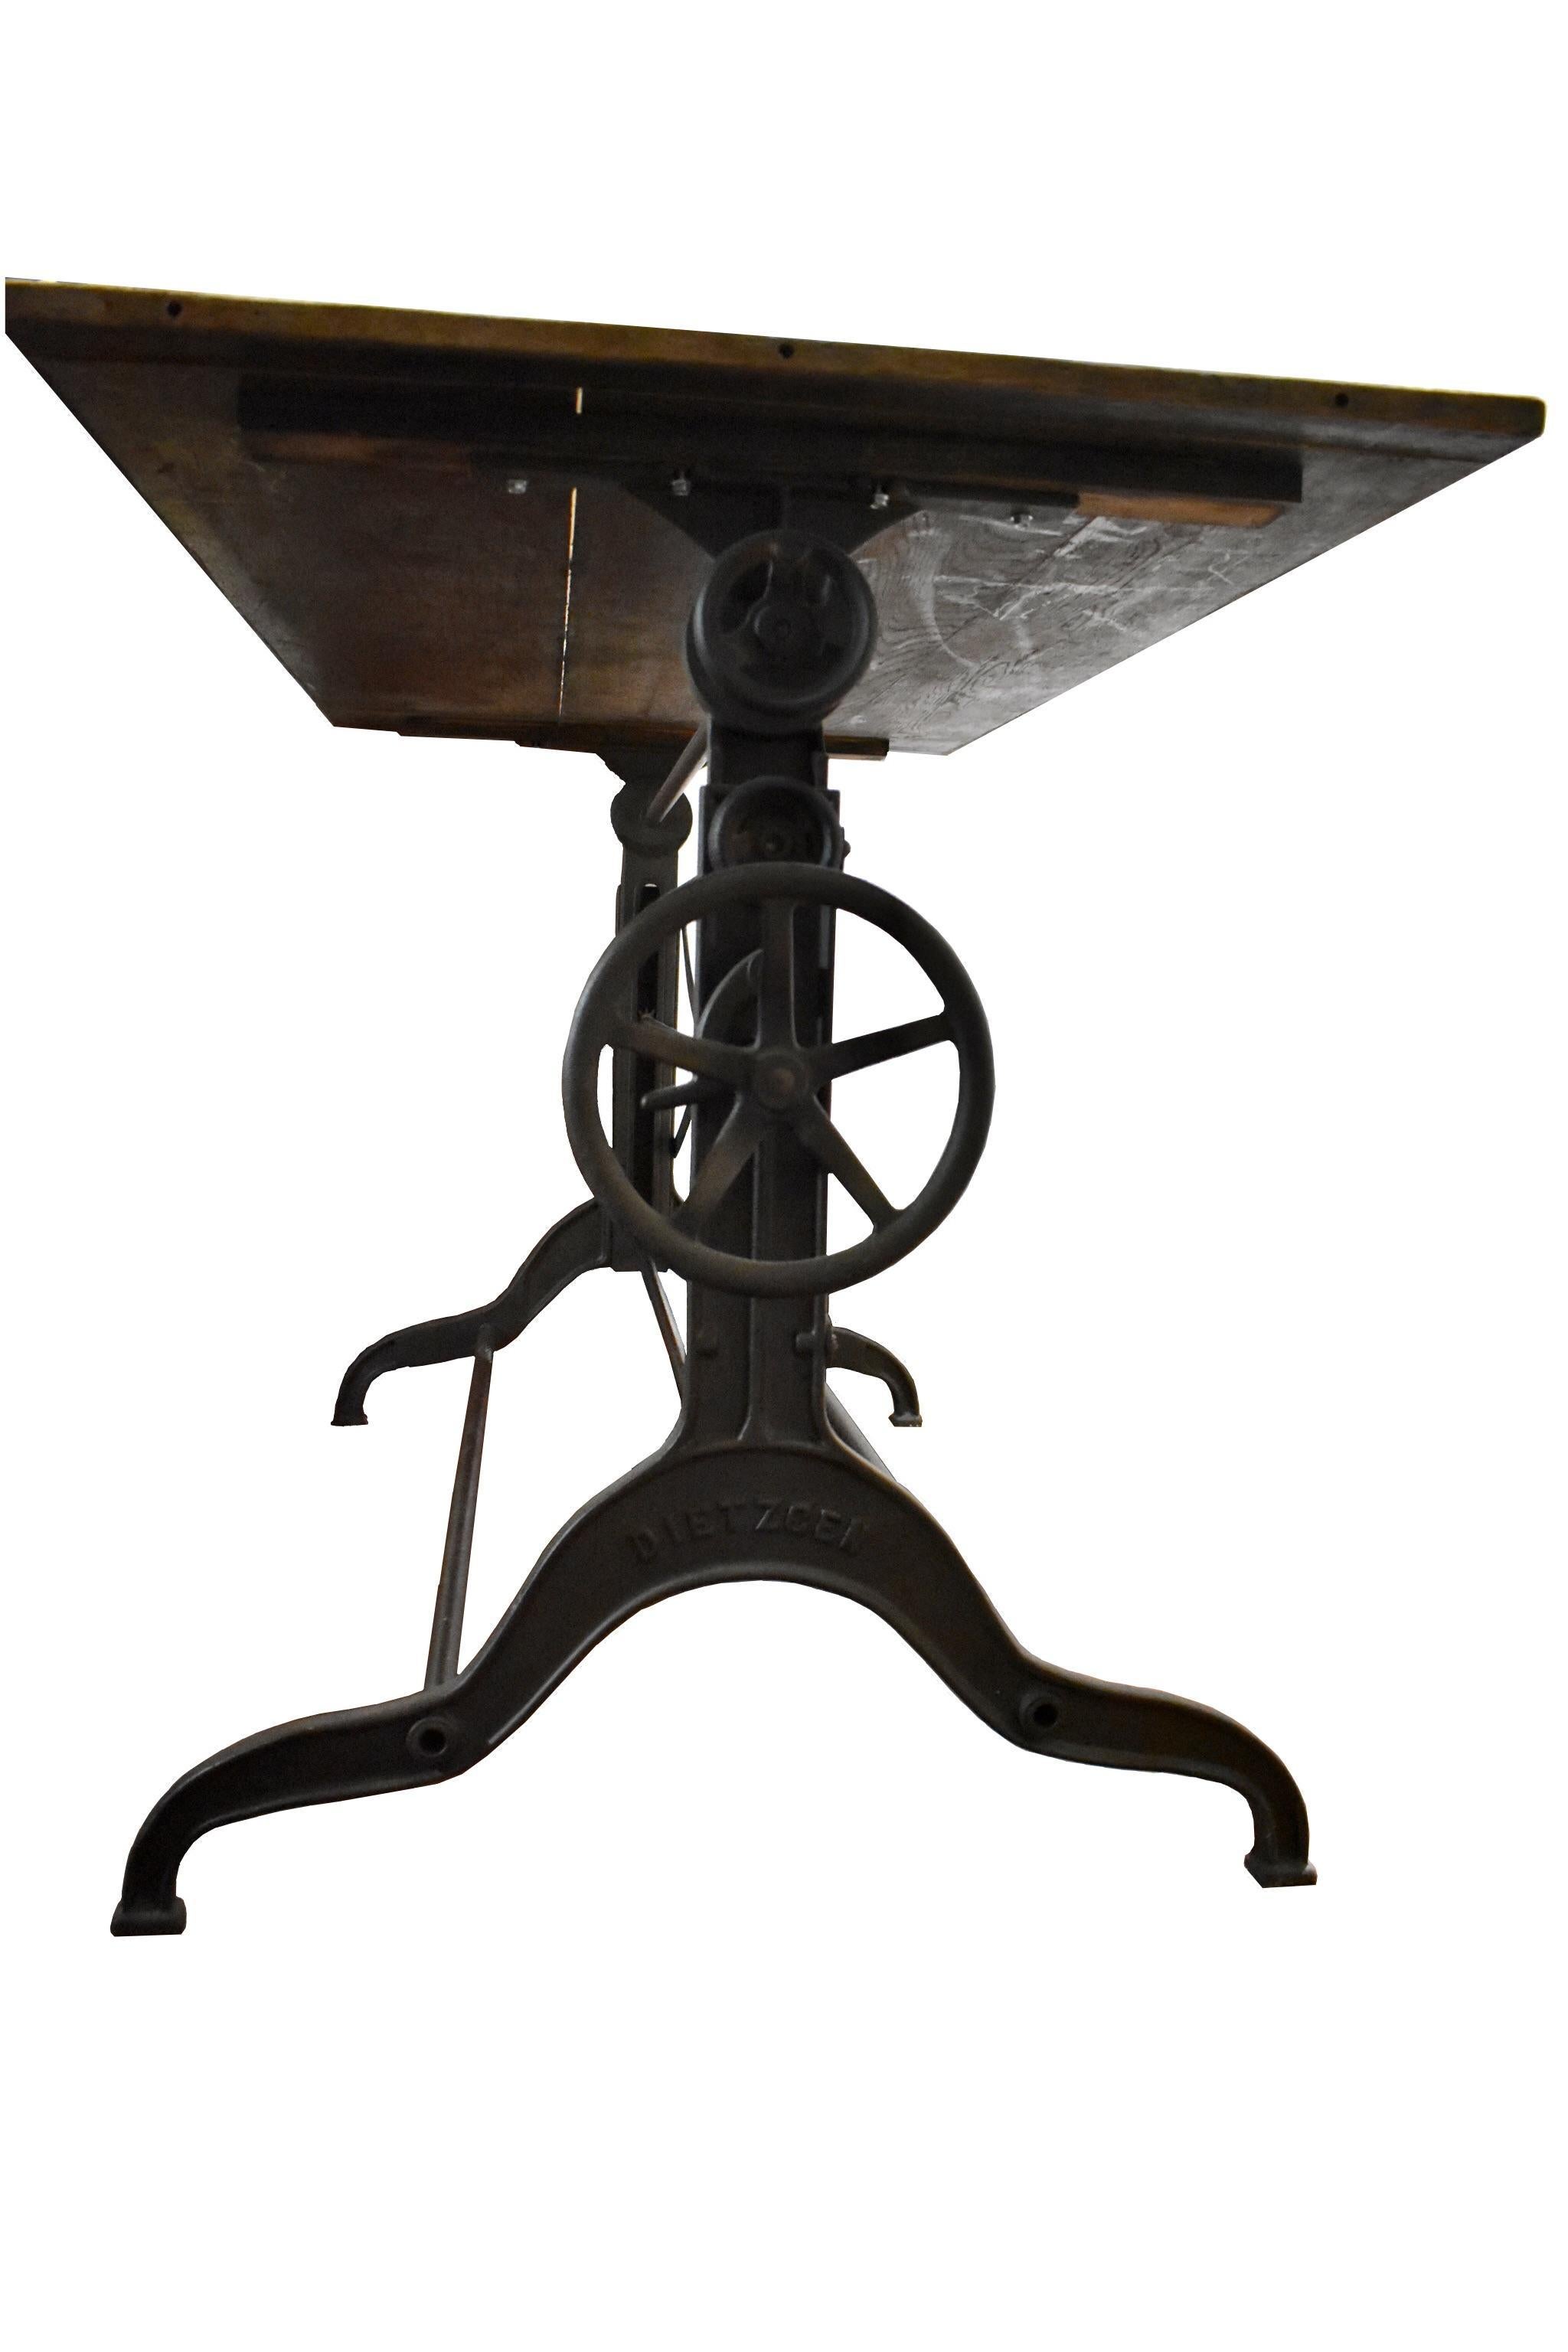 Industrial Cast Iron Adjustable Drafting Table, circa 1900